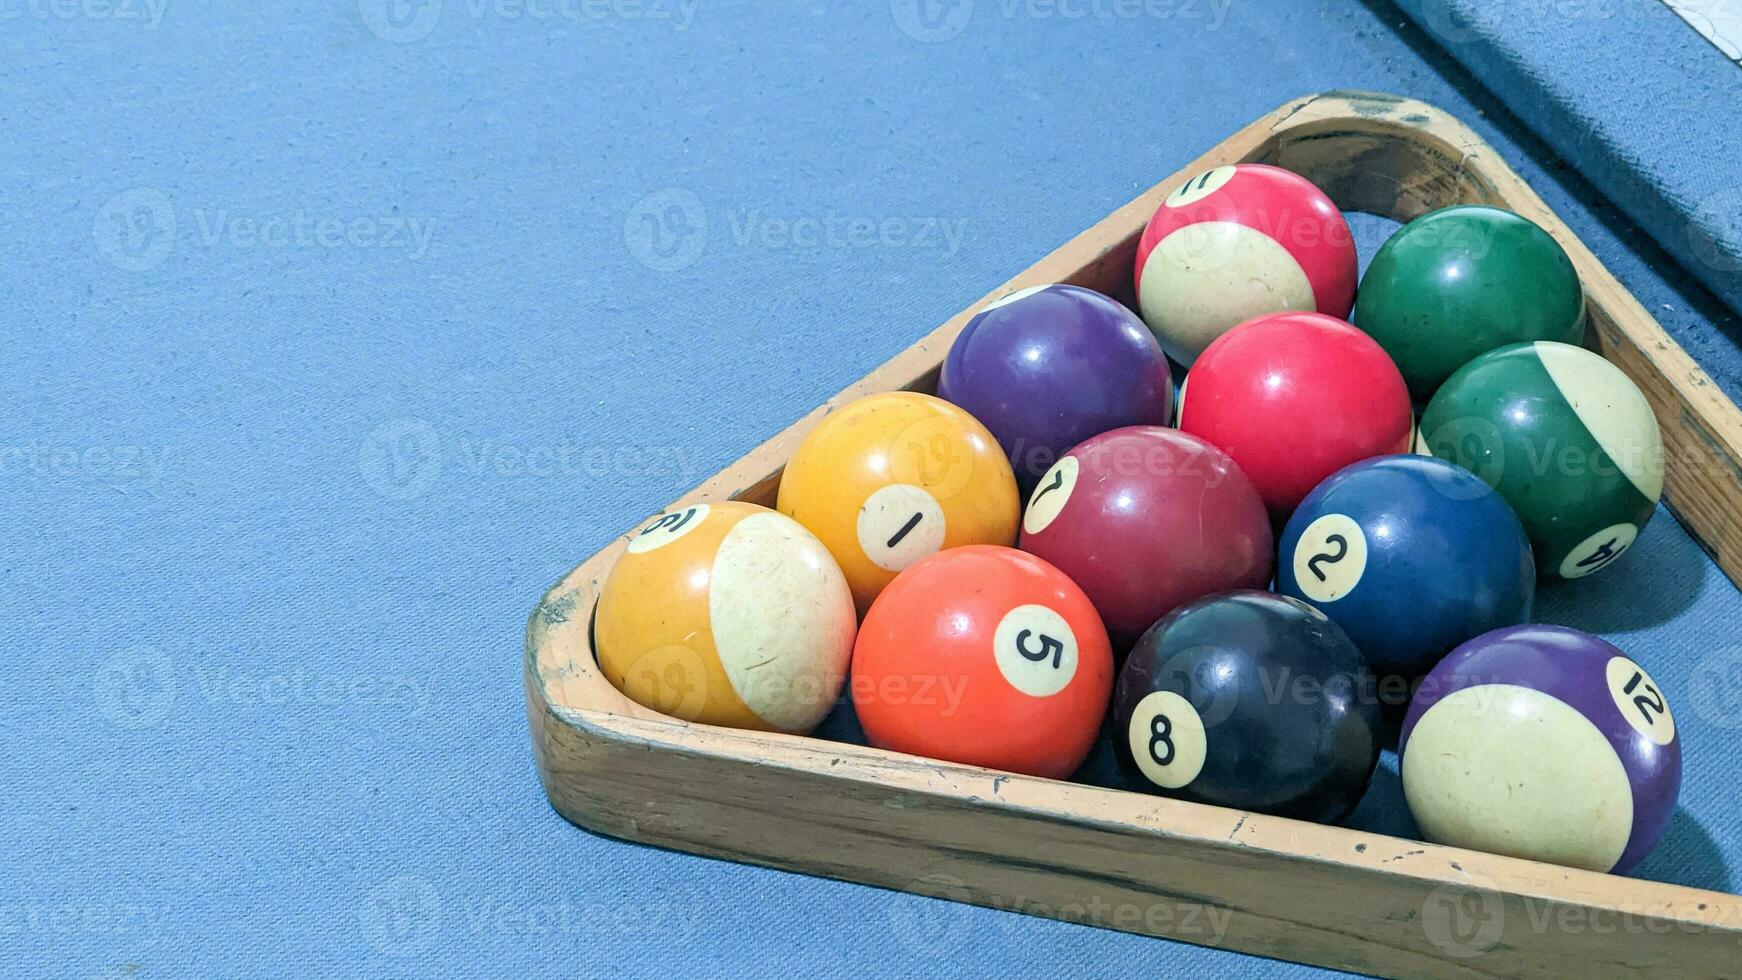 Billiard balls in a wooden box on a blue billiard table photo